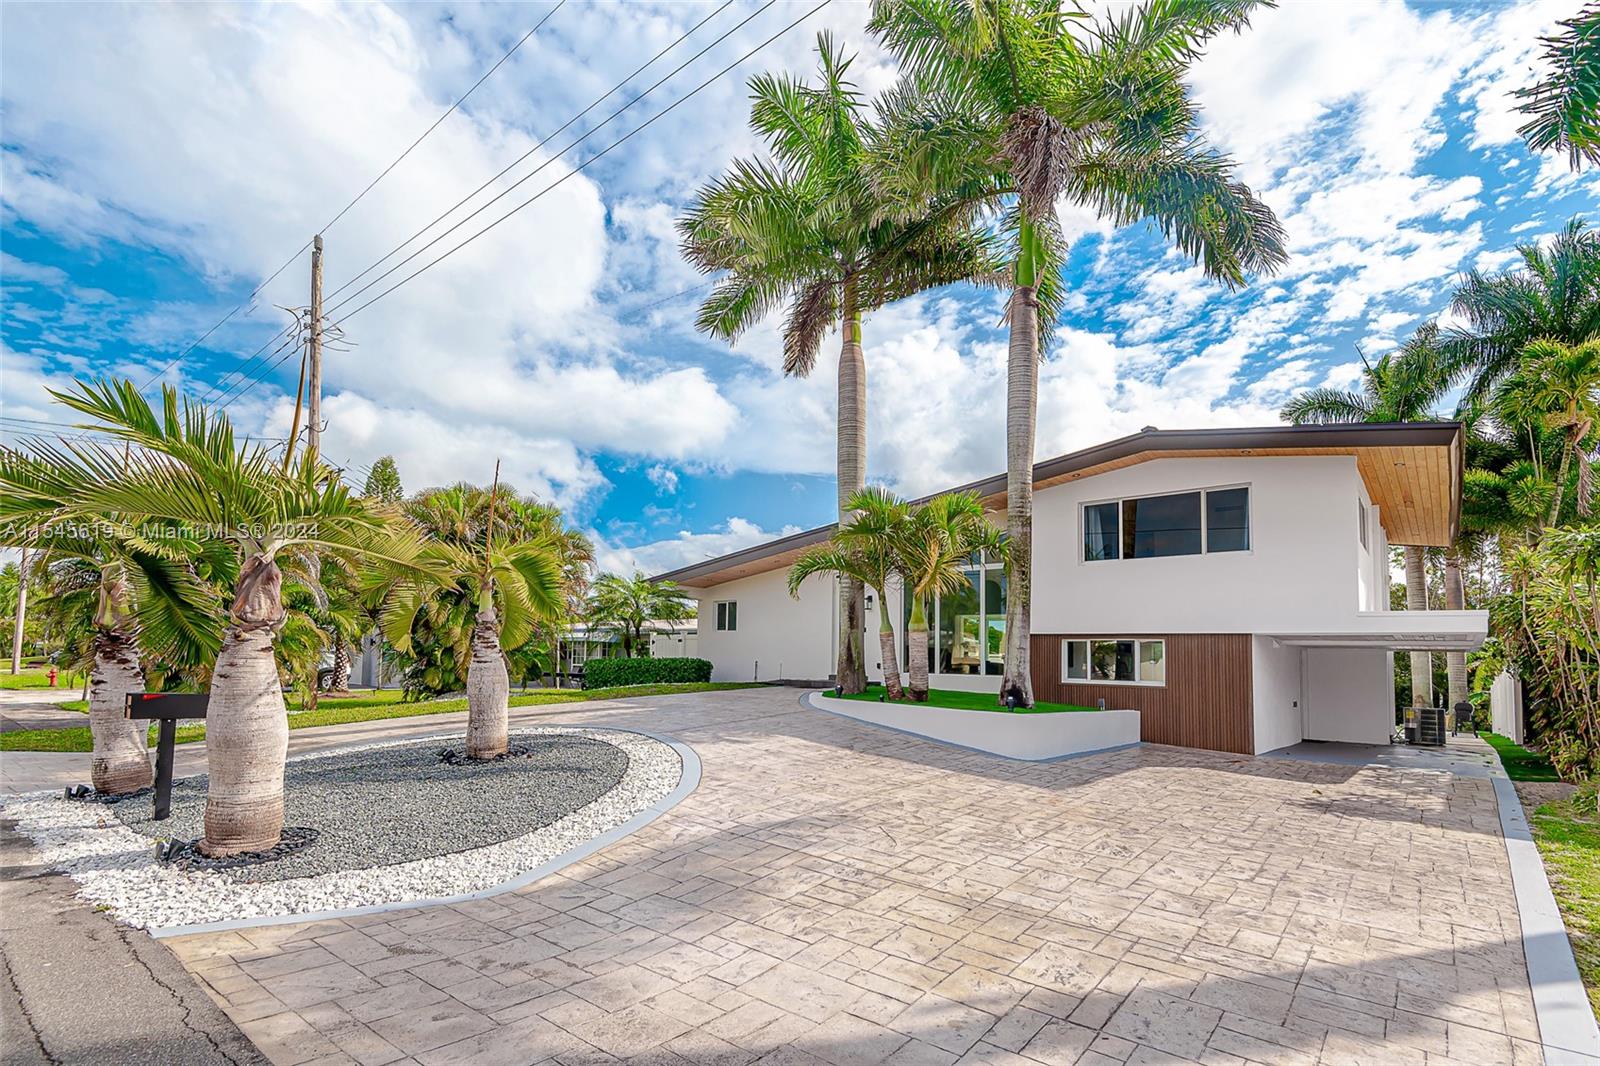 Property for Sale at 2436 Okeechobee Ln, Fort Lauderdale, Broward County, Florida - Bedrooms: 3 
Bathrooms: 2  - $1,595,000